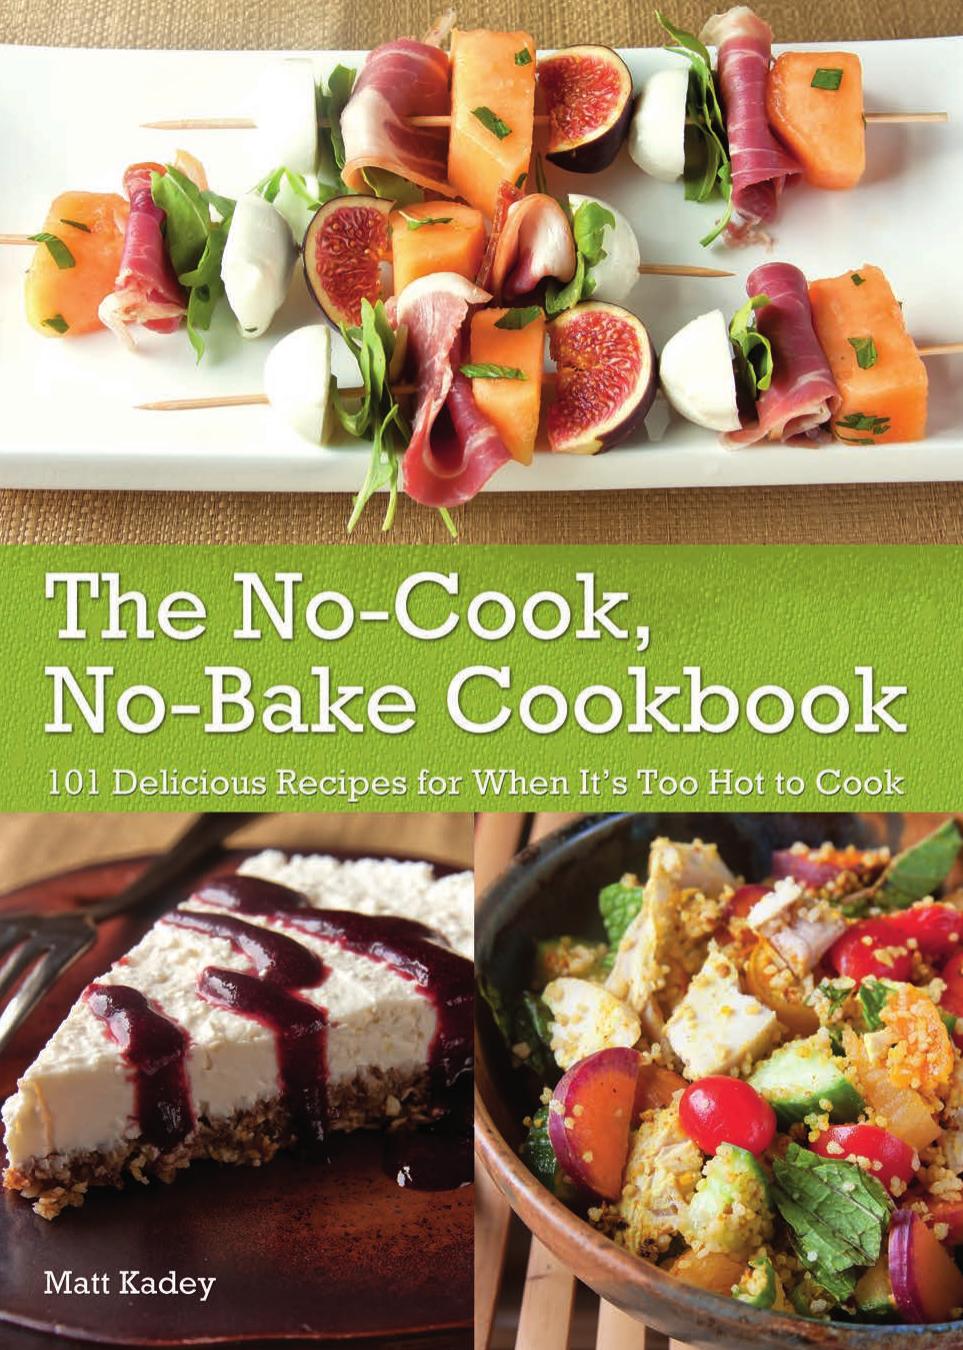 Cookbook - The No-Cook, No-Bake Cookbook by Cookbook